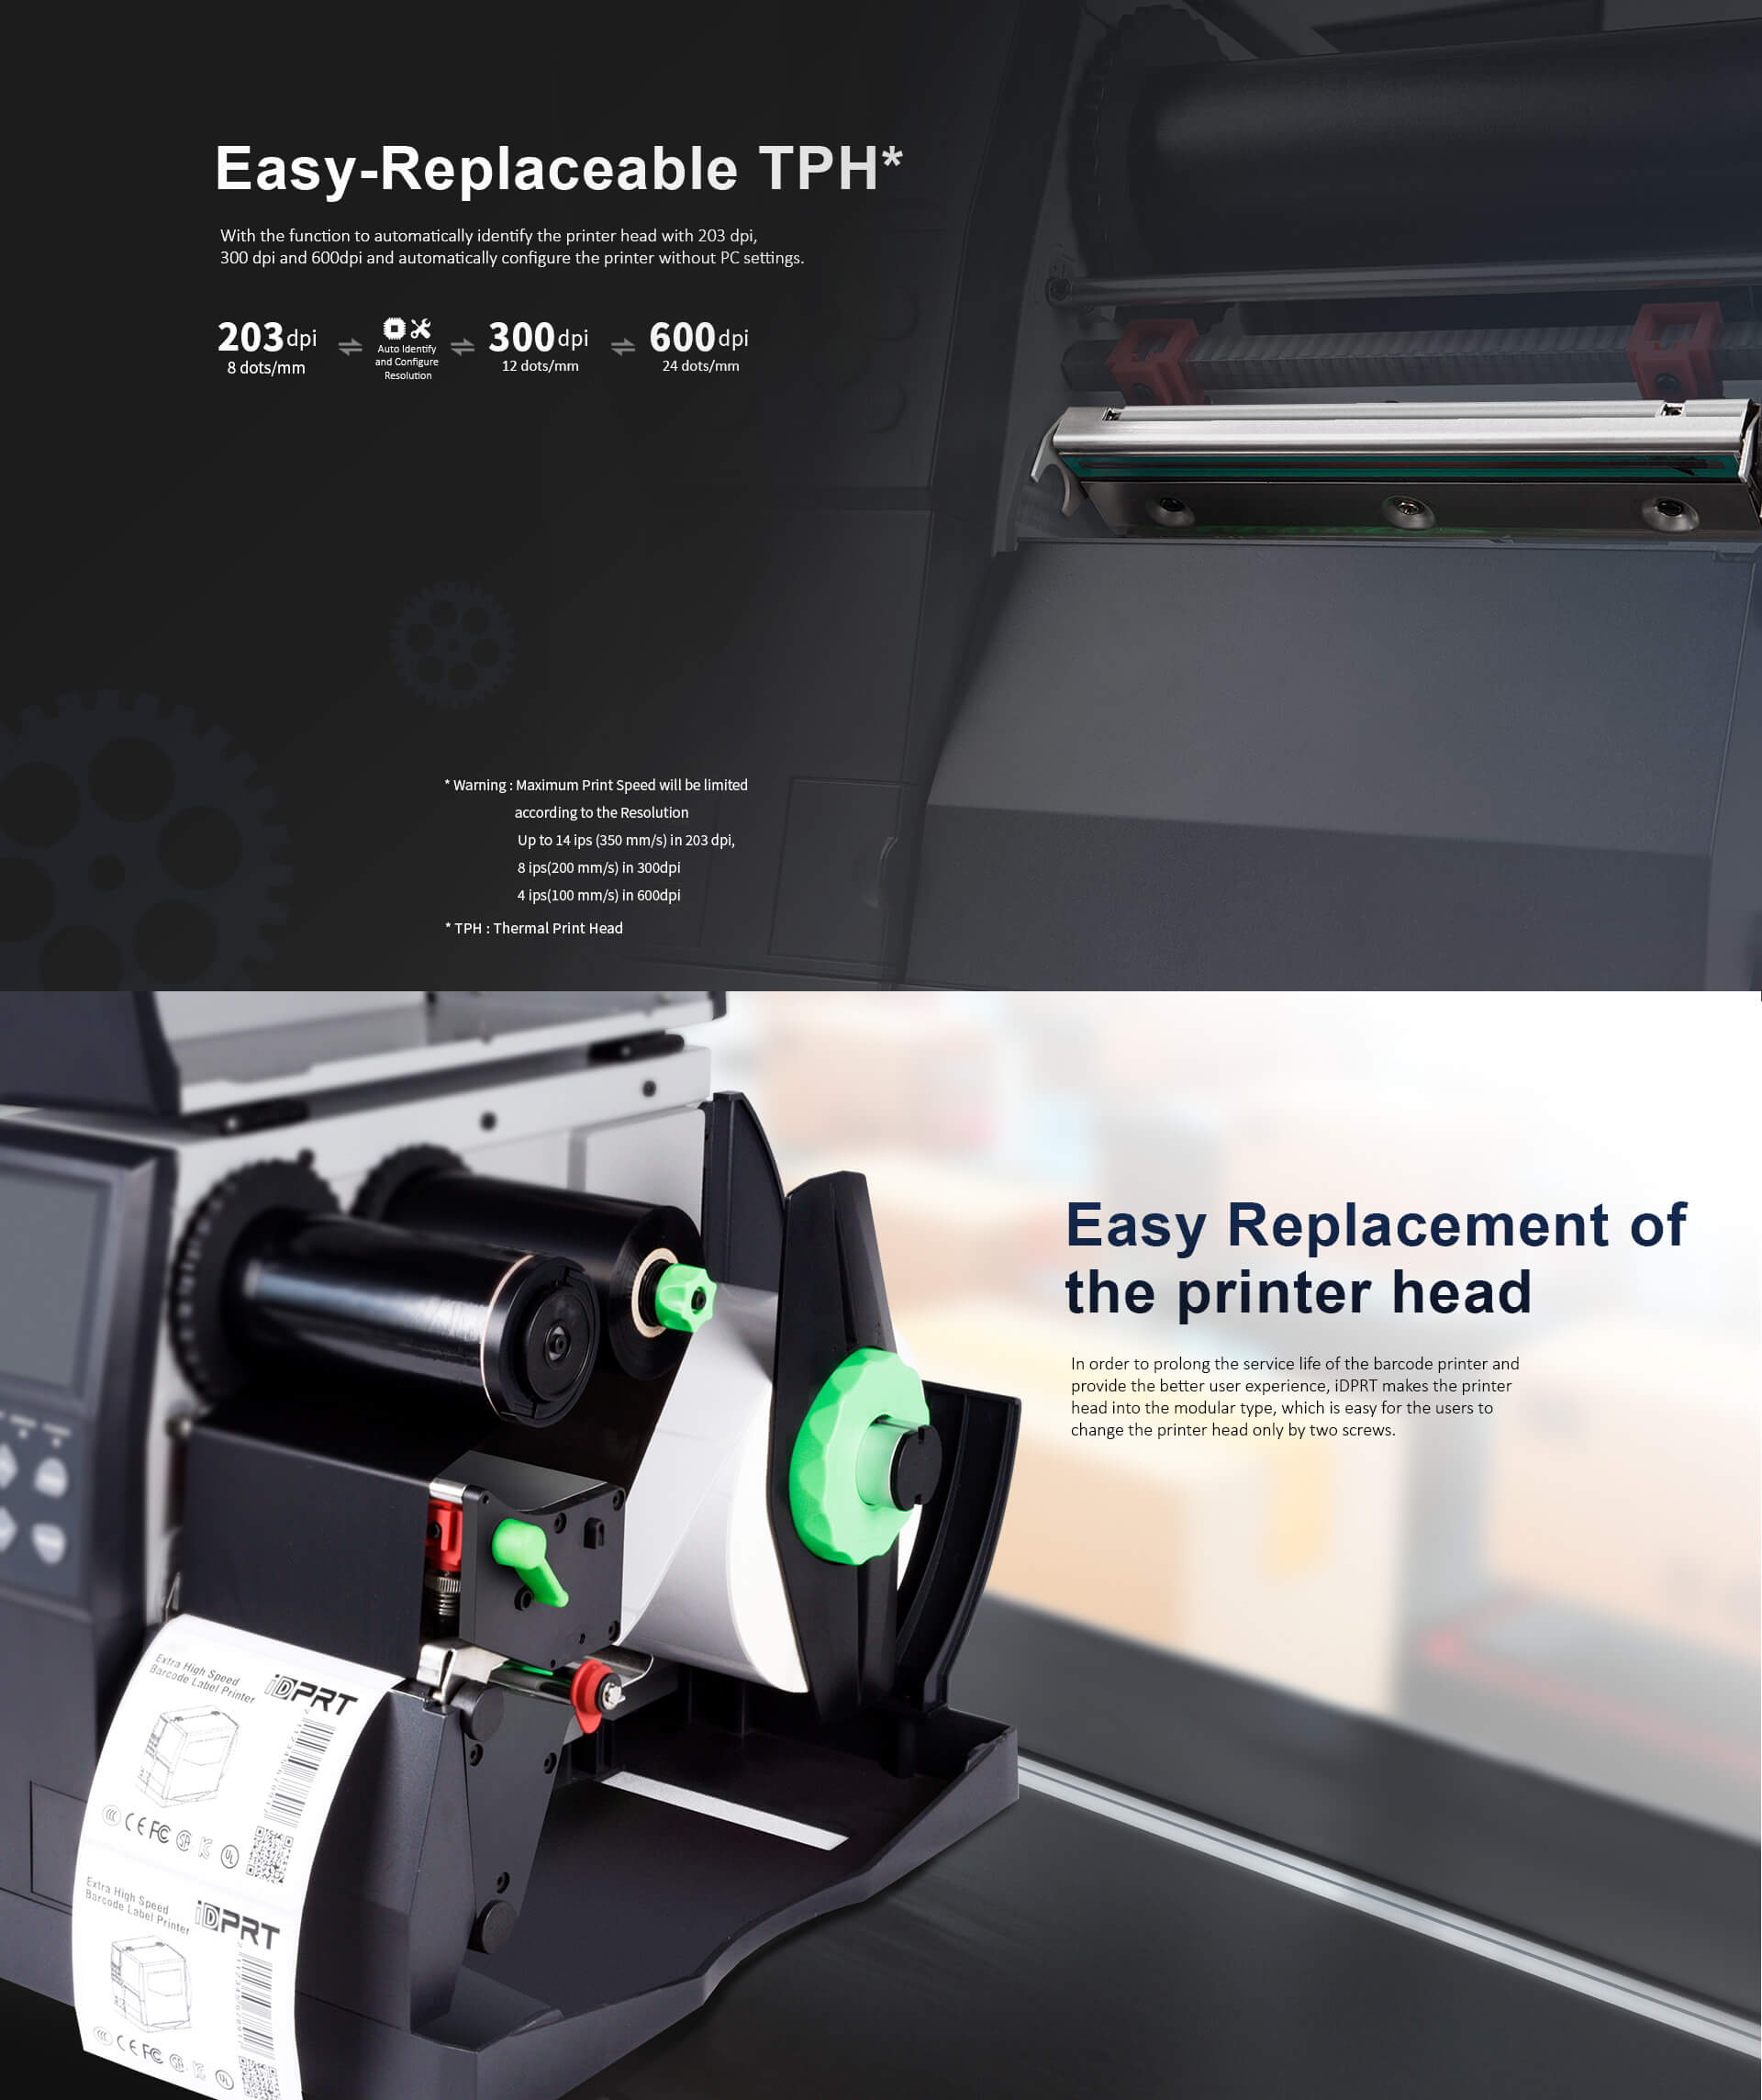 203dpi, 300dpi, 600dpi, 4 inch RFID tag printer